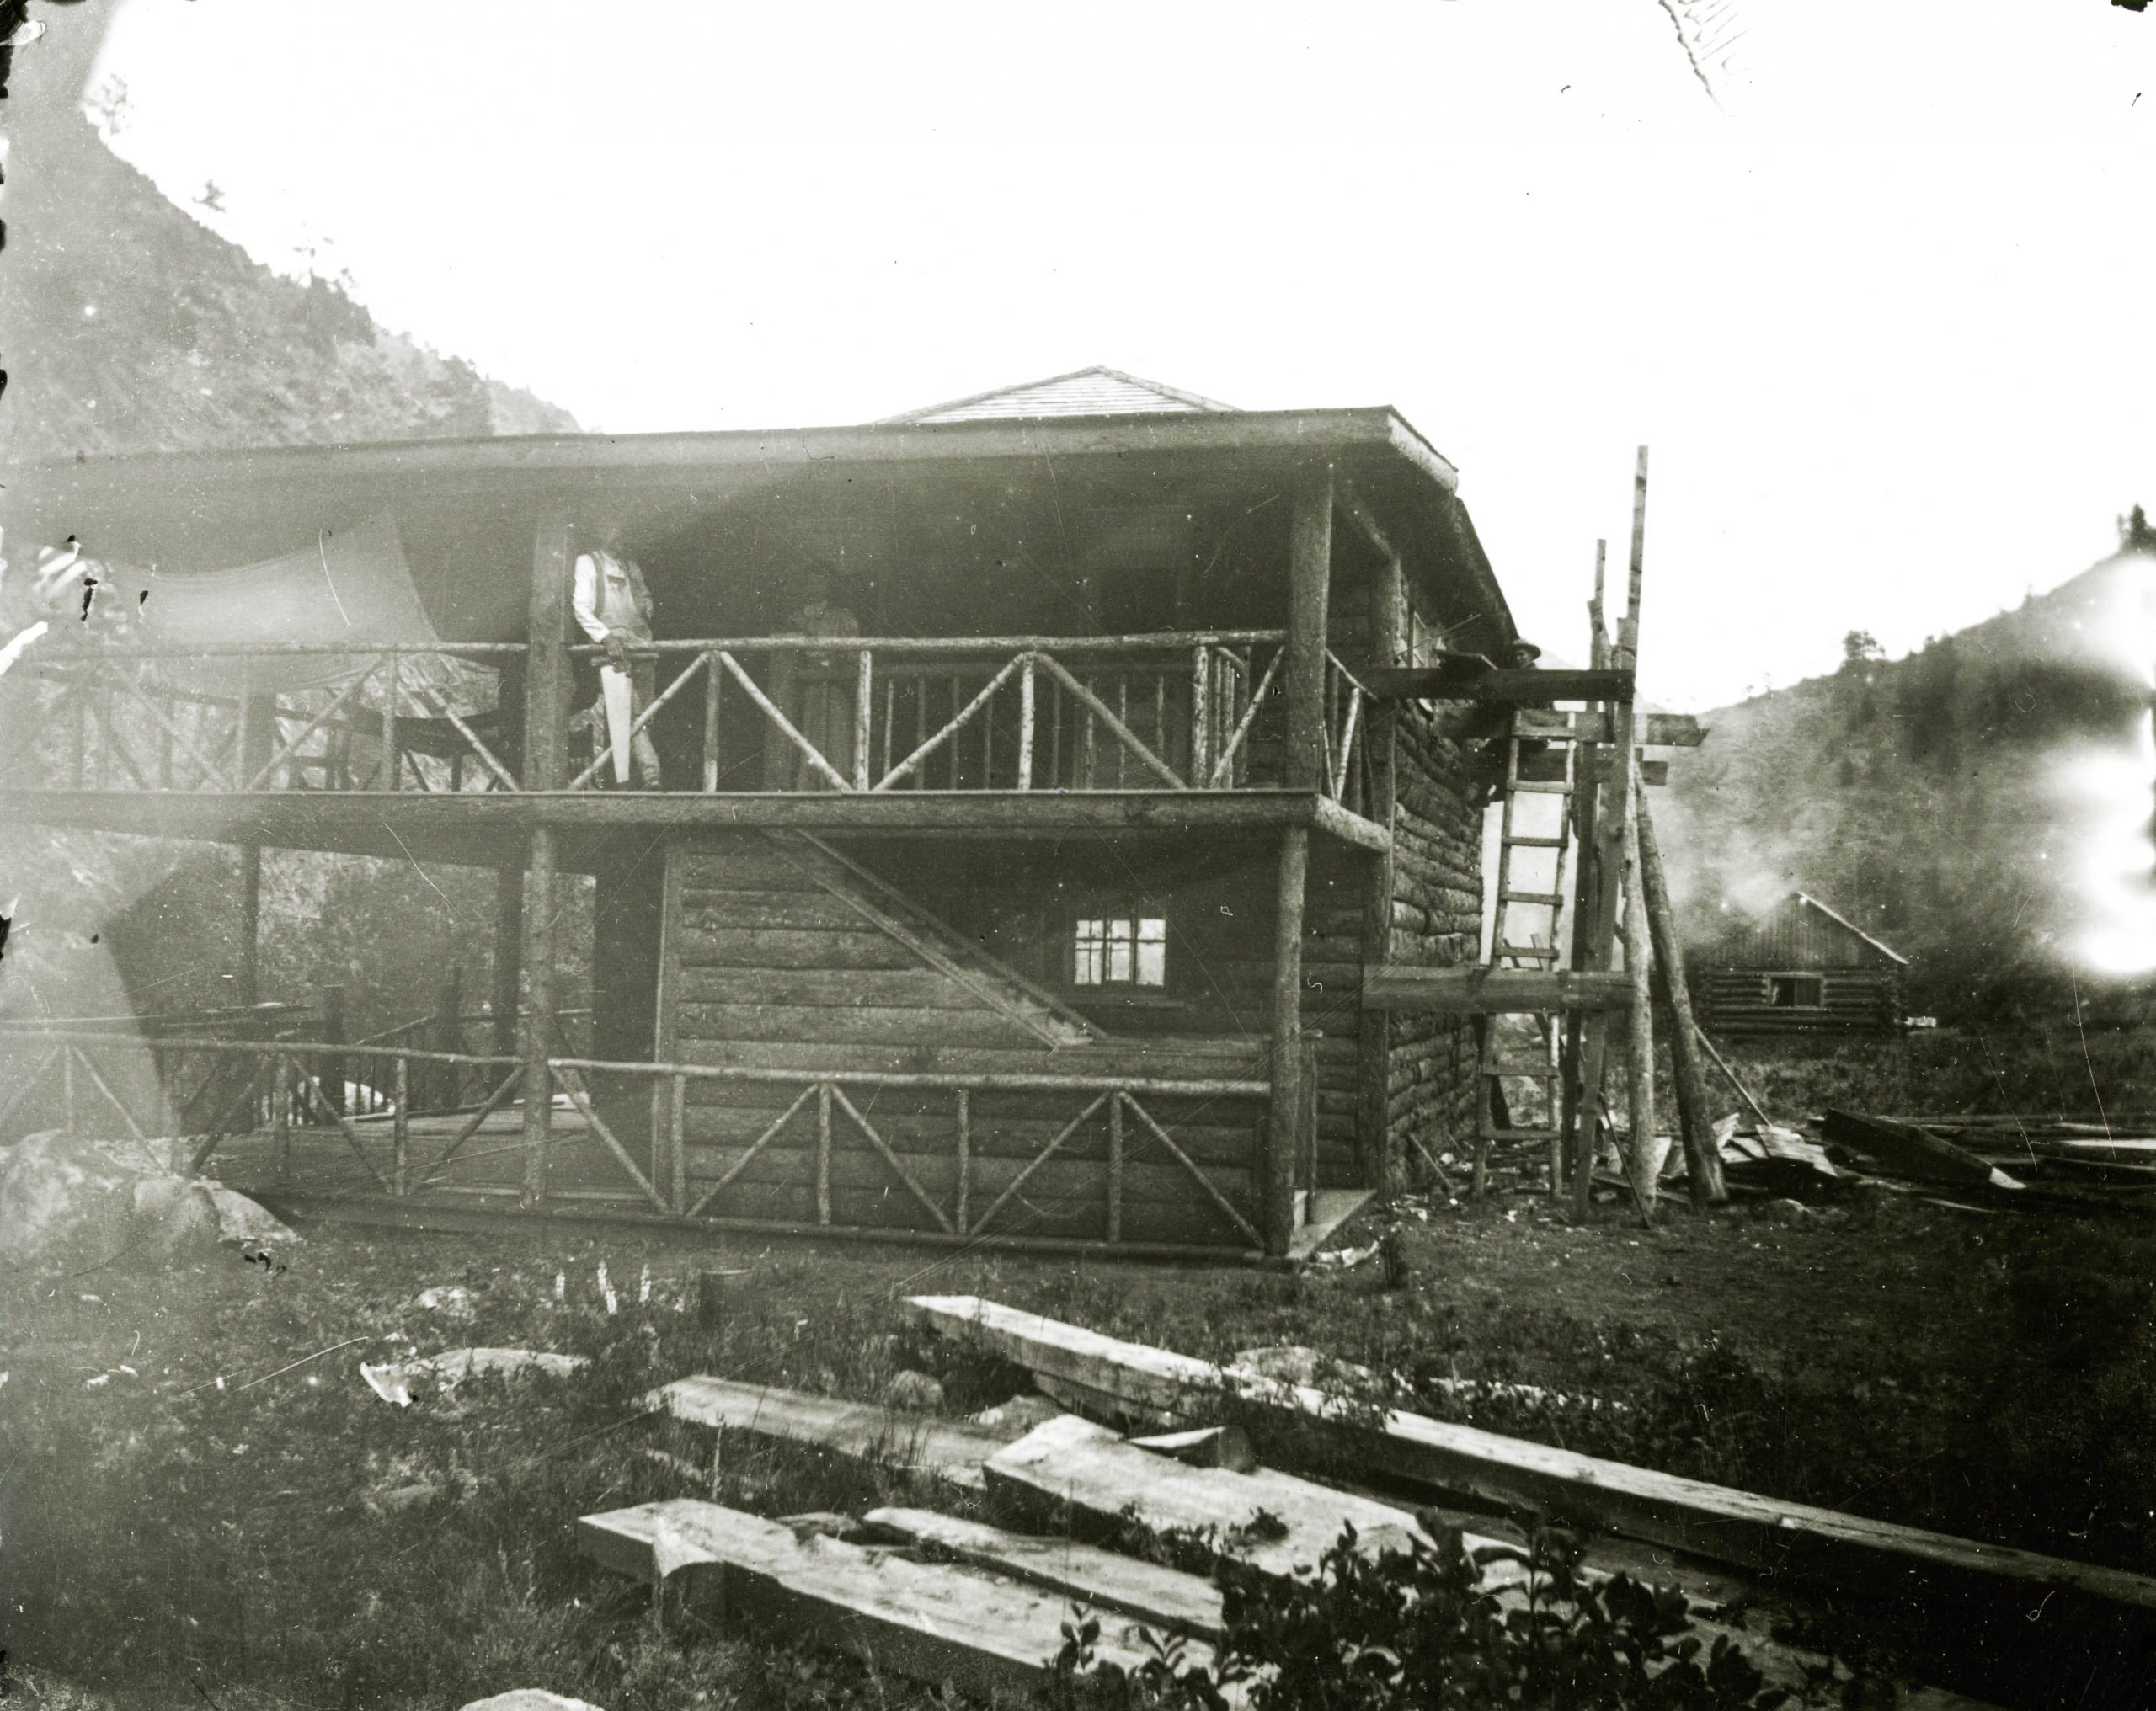 Idlewild Lodge - idlewildlodge.github.io - Circa 1910 - Idlewild in Big Thompson Canyon - Fort Collins History